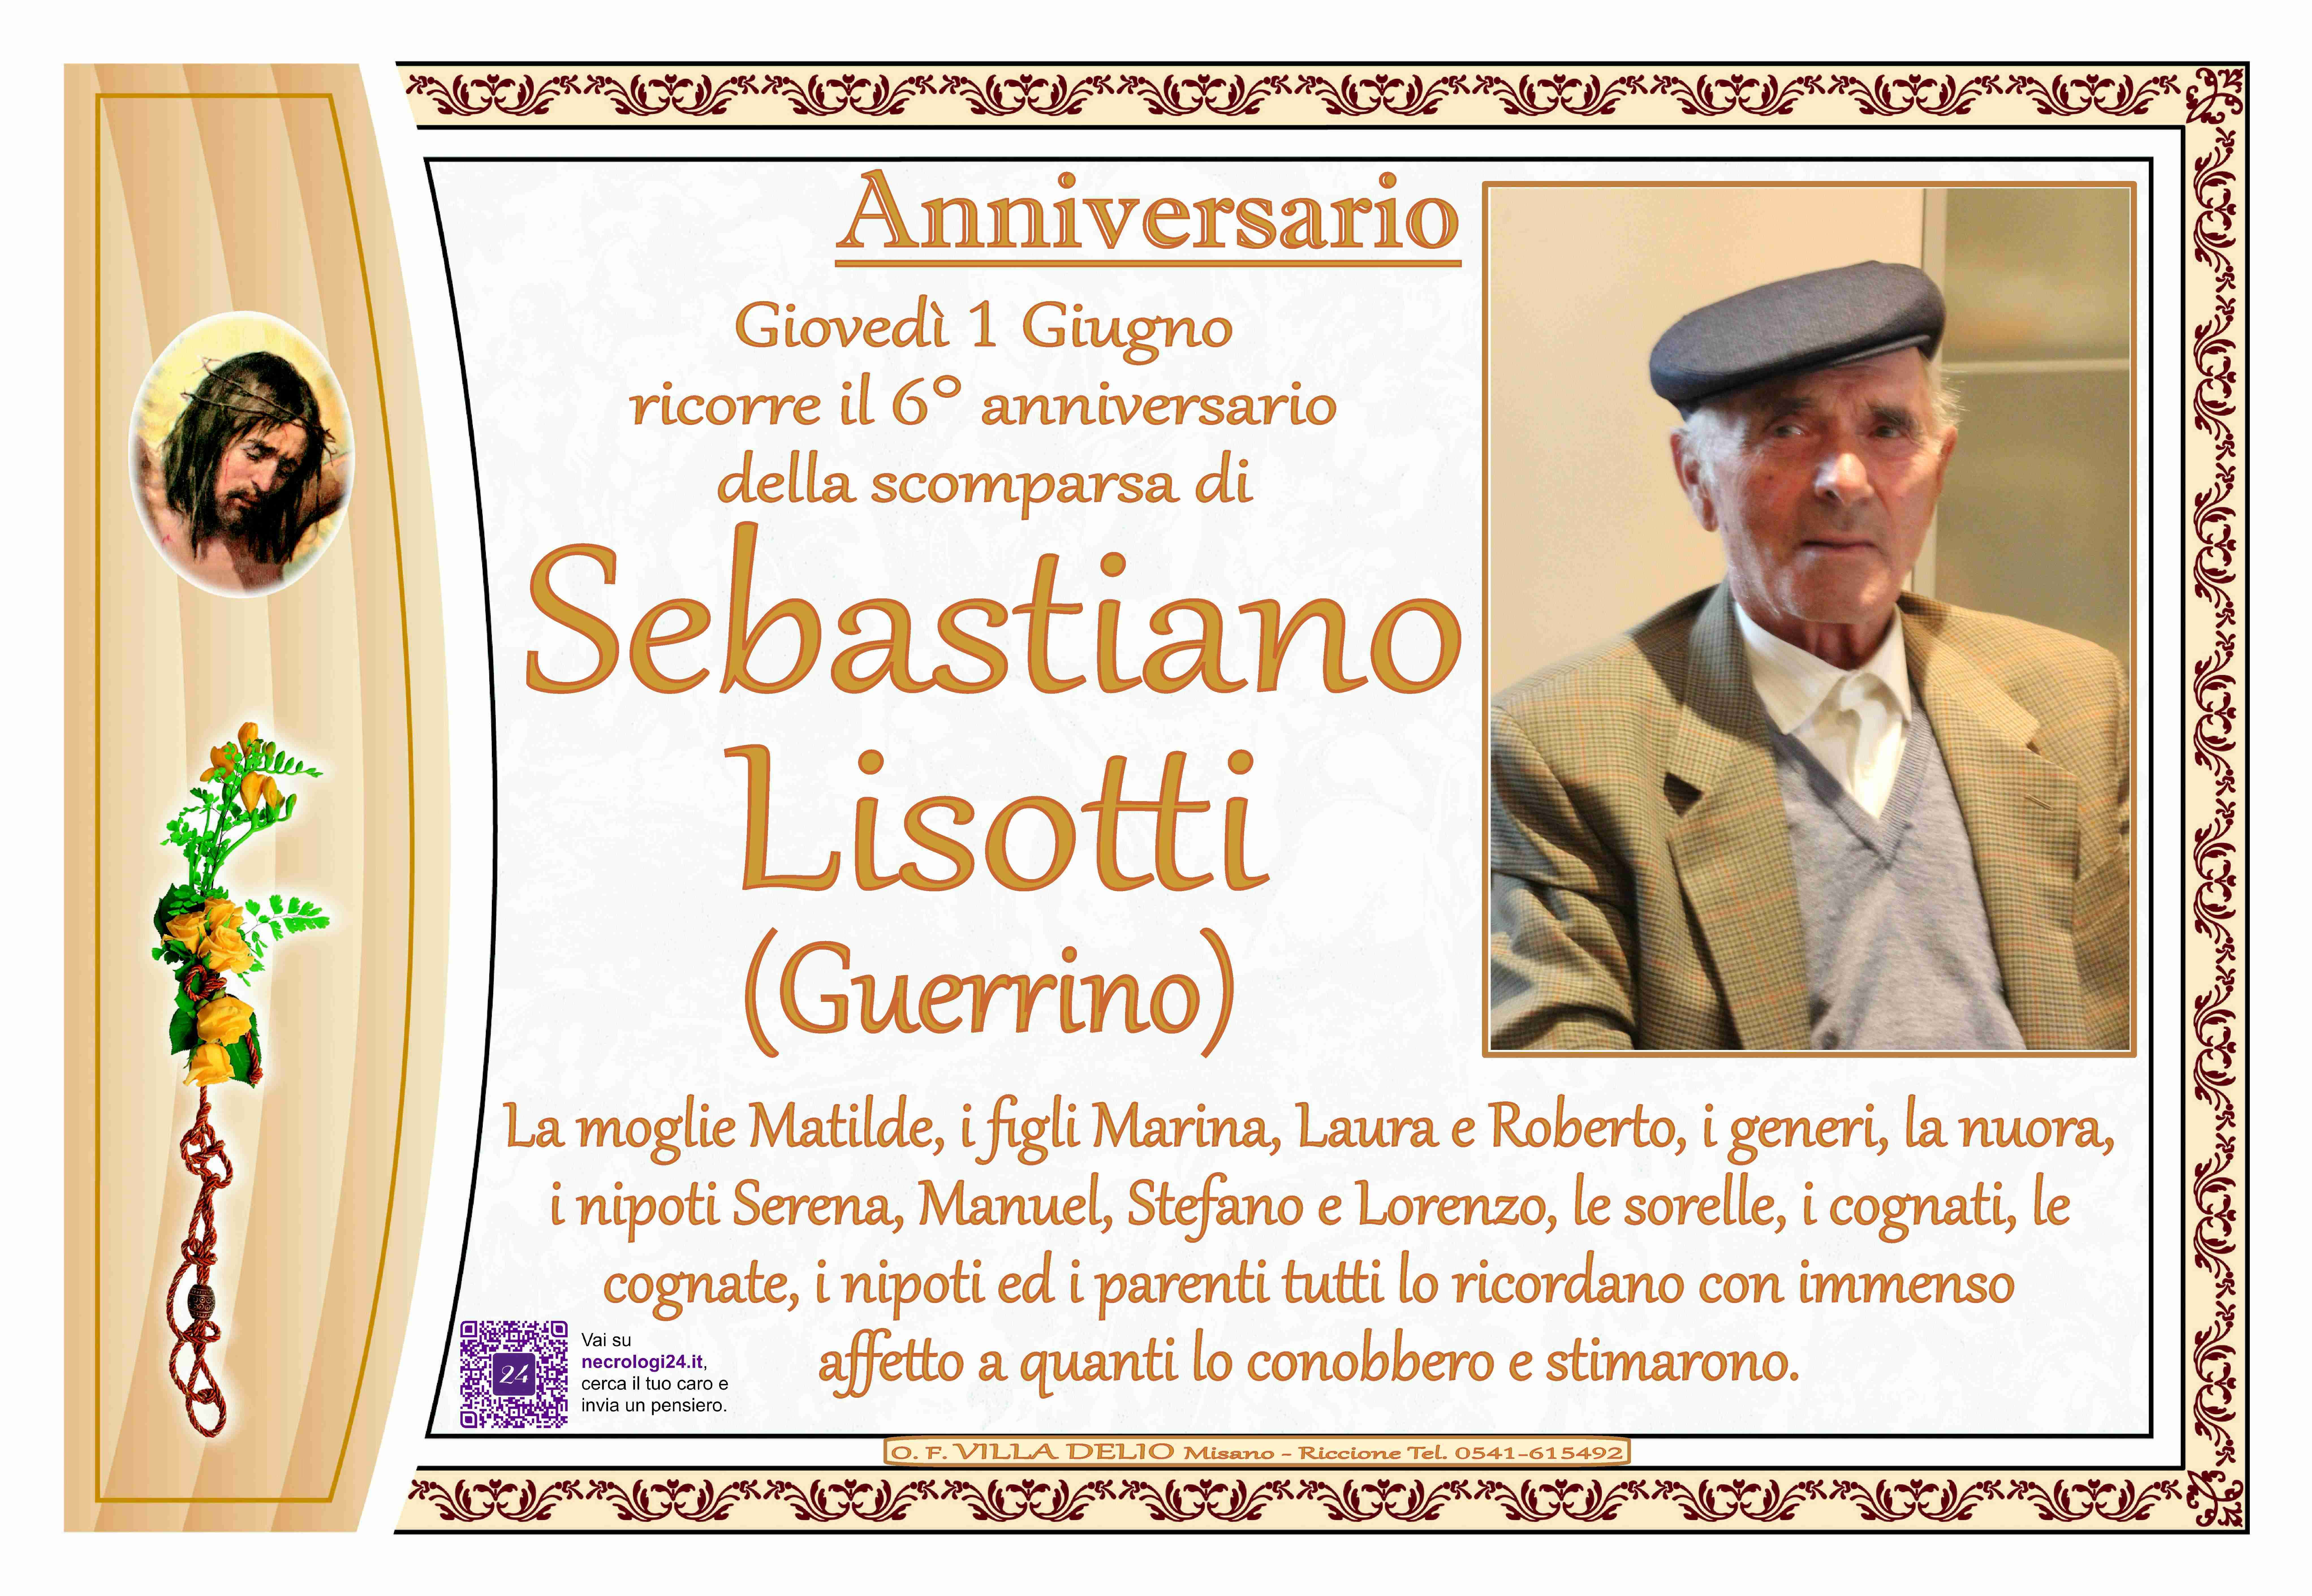 Sebastiano Lisotti